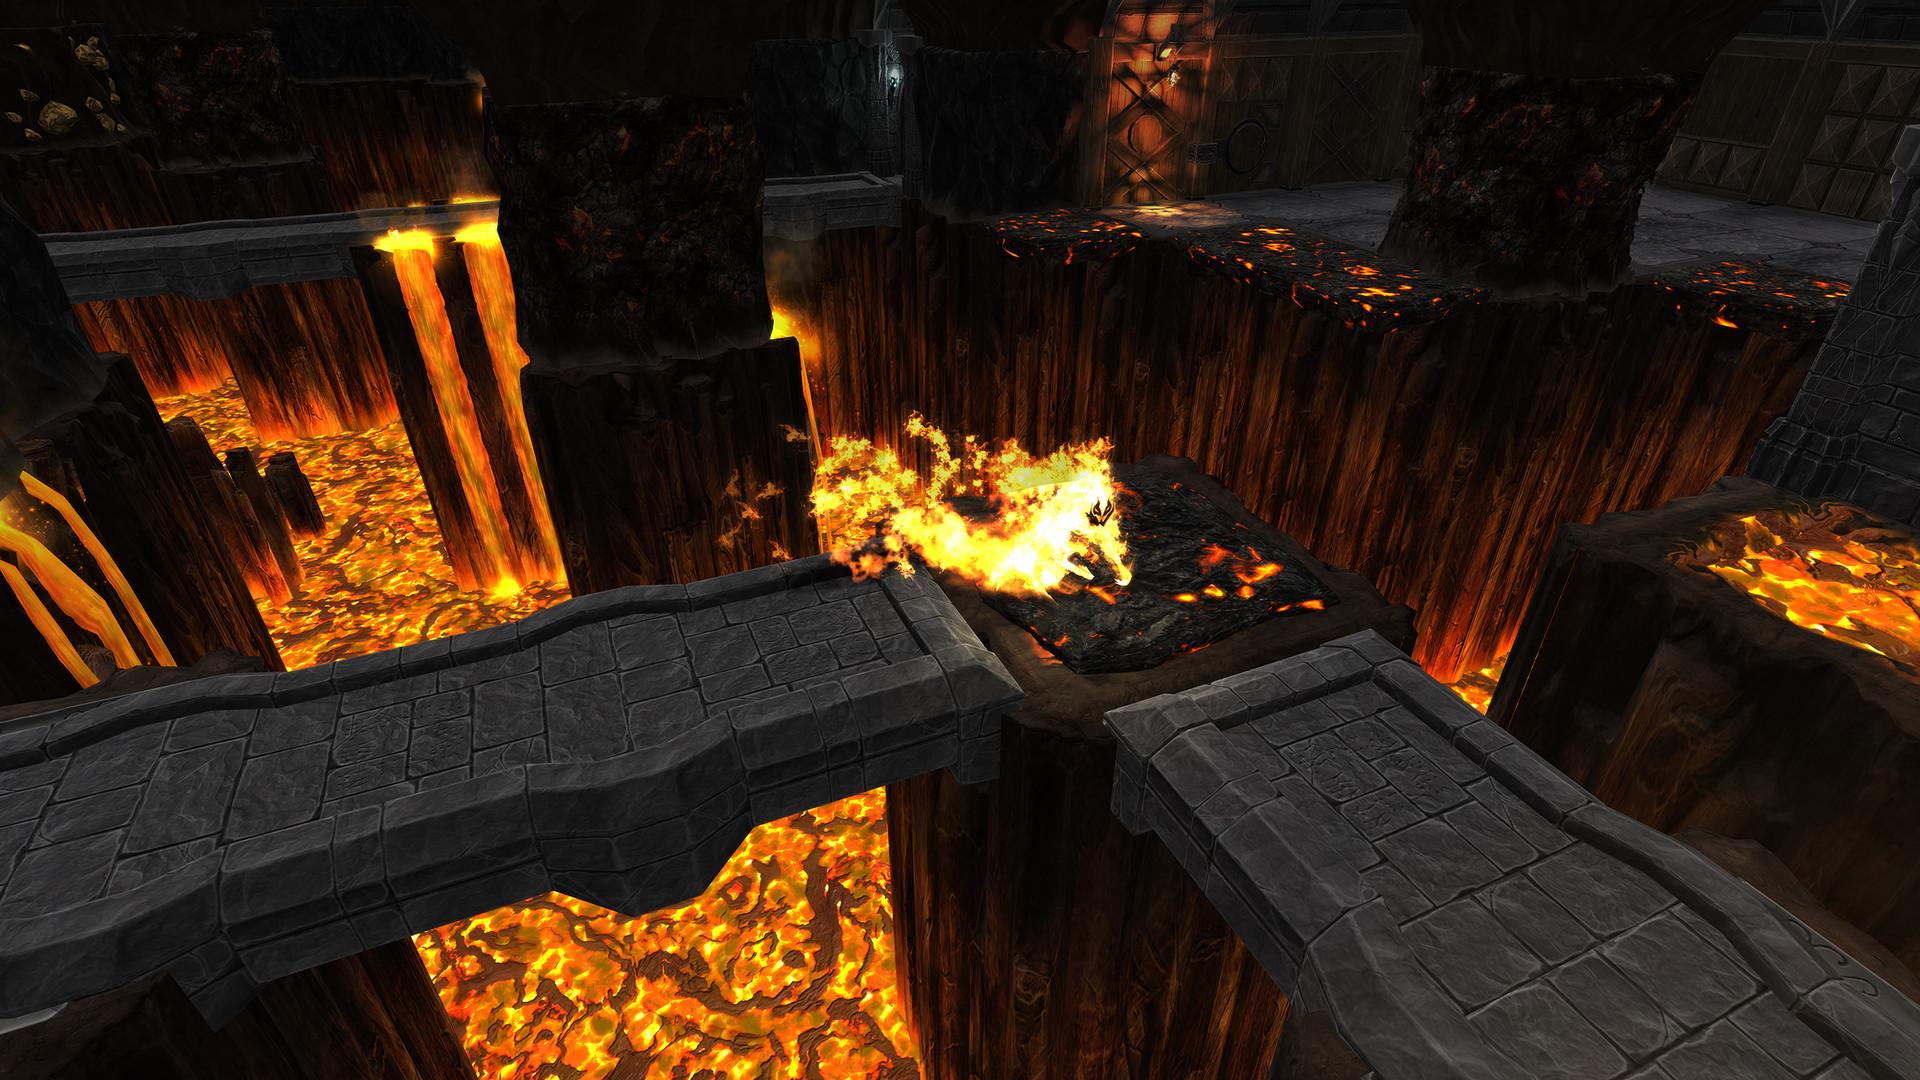 Screenshot №14 from game War for the Overworld